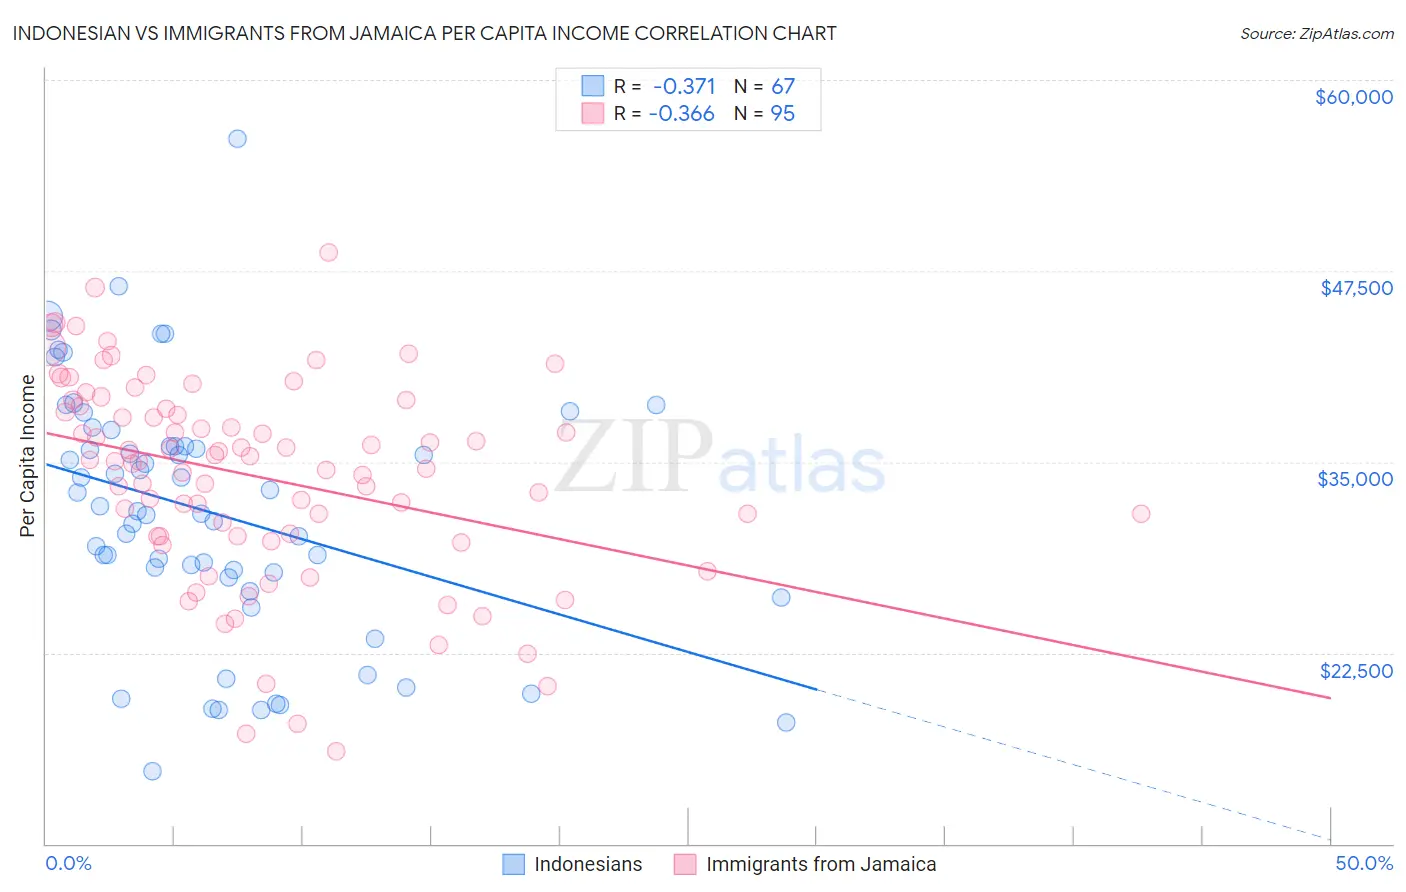 Indonesian vs Immigrants from Jamaica Per Capita Income